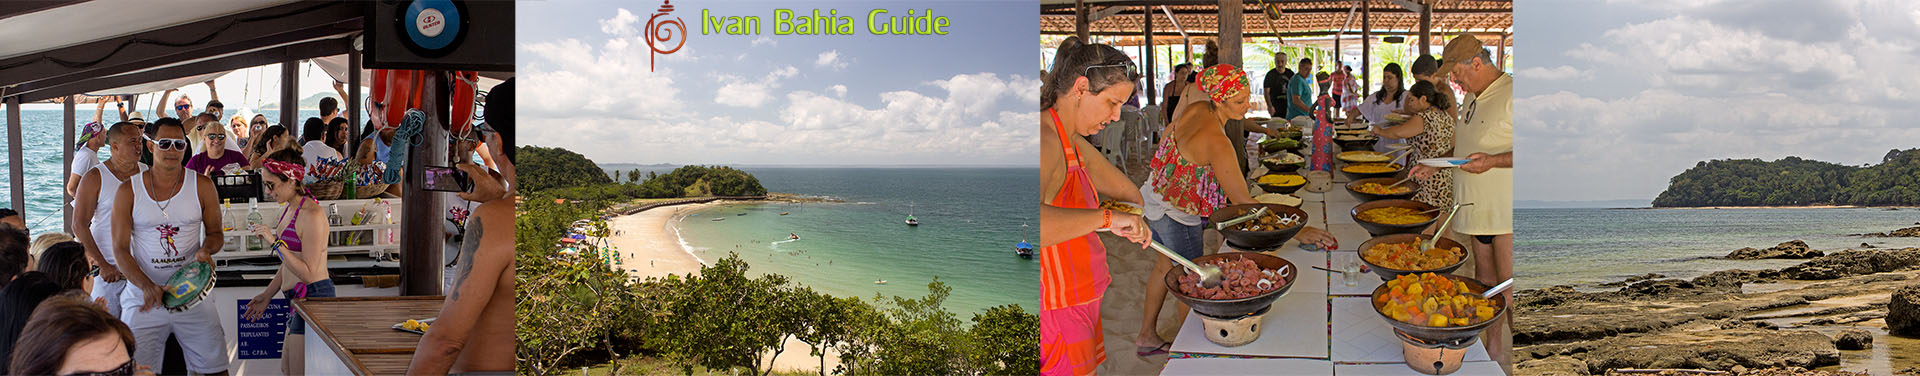 island tour Itaparica & Frades, visit aphrodisiac tropical beaches Bahia with Ivan Bahia Guide / Photography by #IvanBahiaGuide ref., #ToursByLocals, #fernandobingre, @fernandobingre